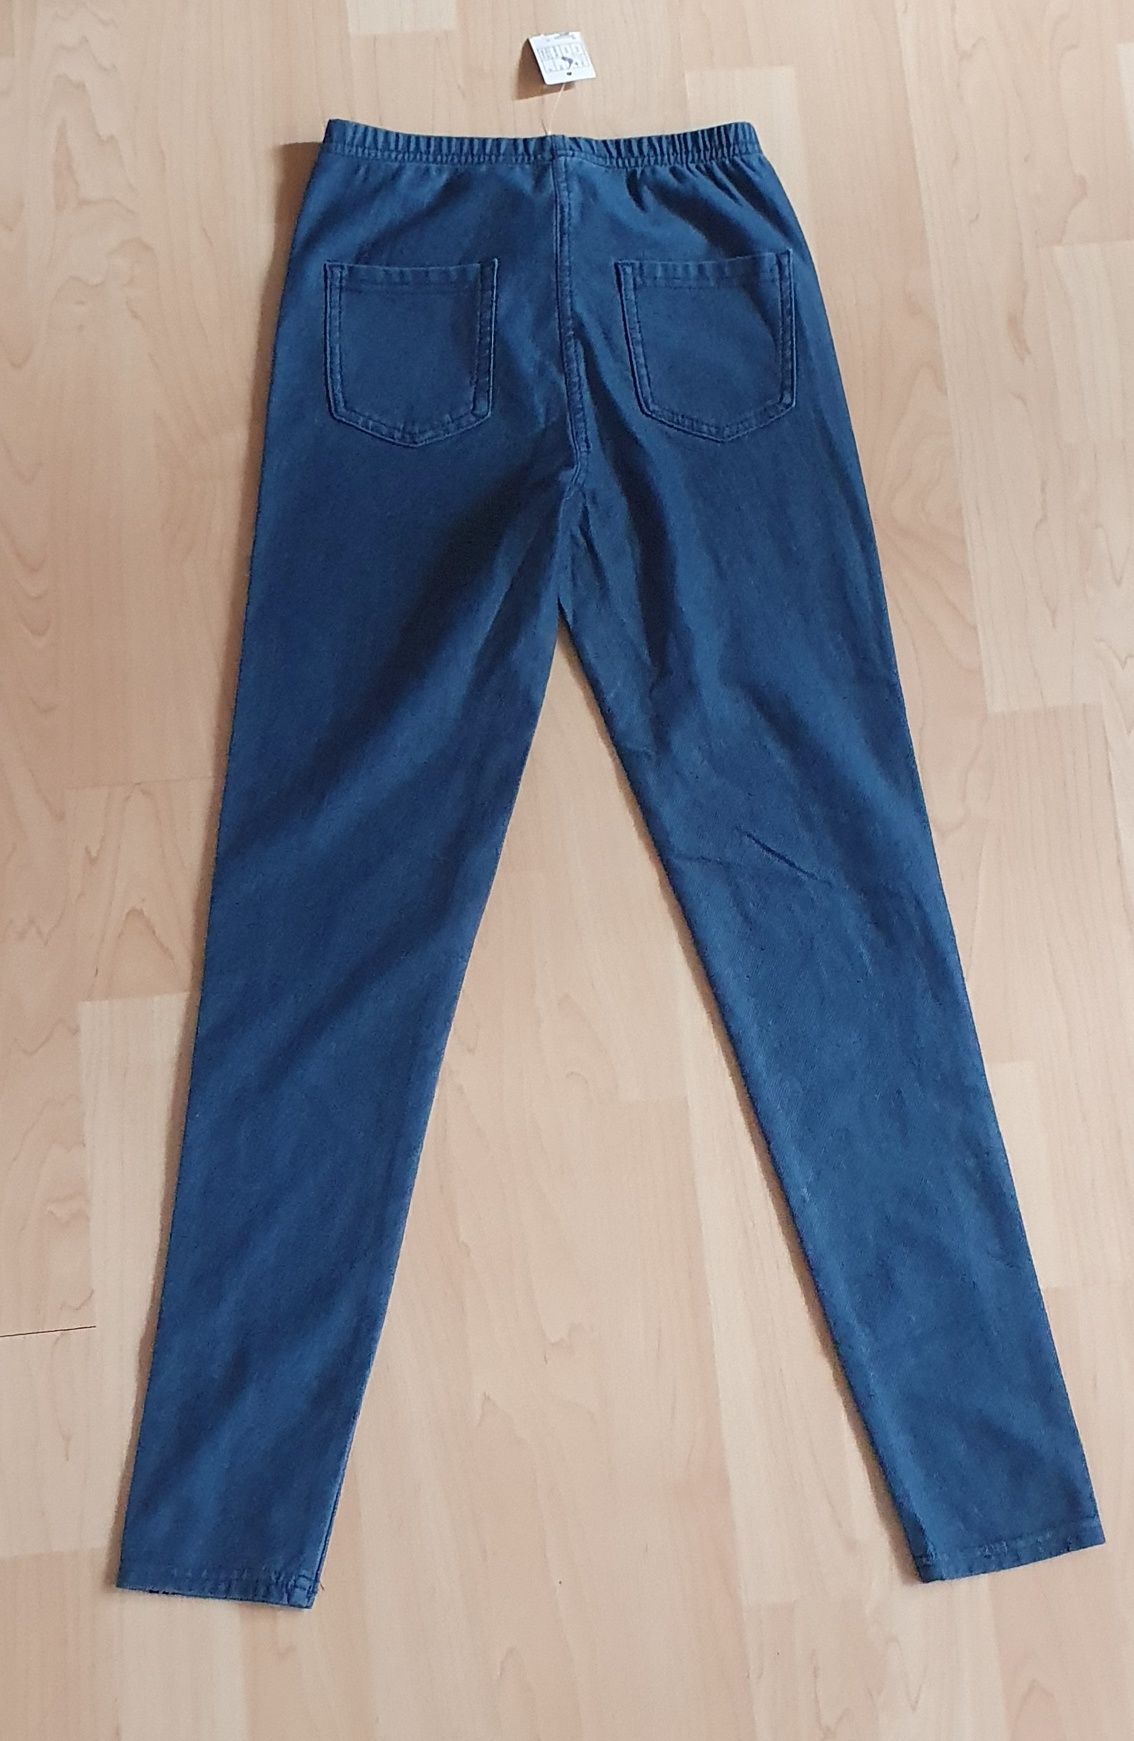 Colanti /jeggings/jeans , noi, Calzedonia 7-10 ani